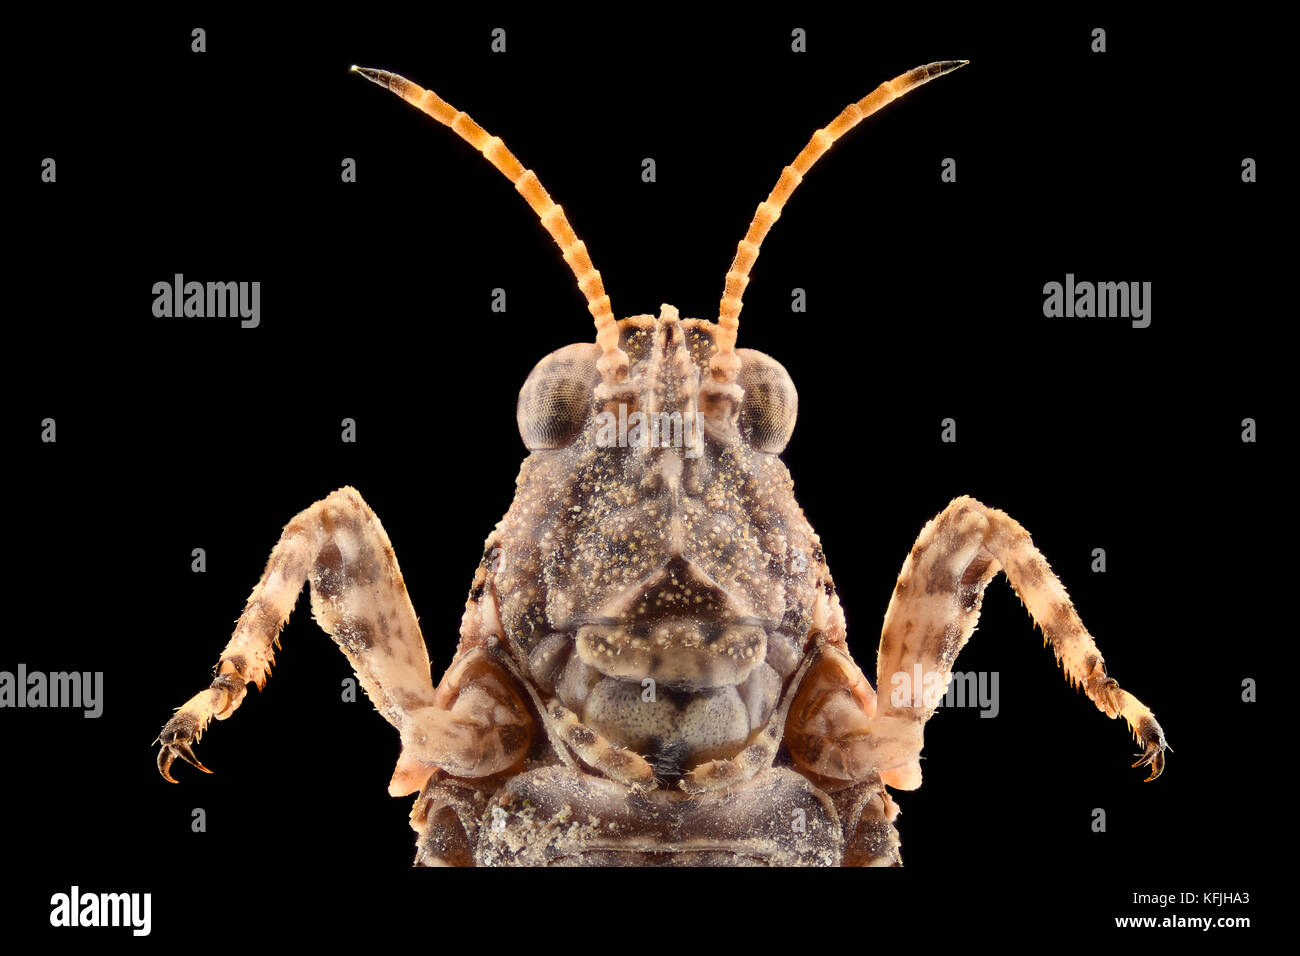 Extreme magnification - Cricket (grasshopper) Stock Photo